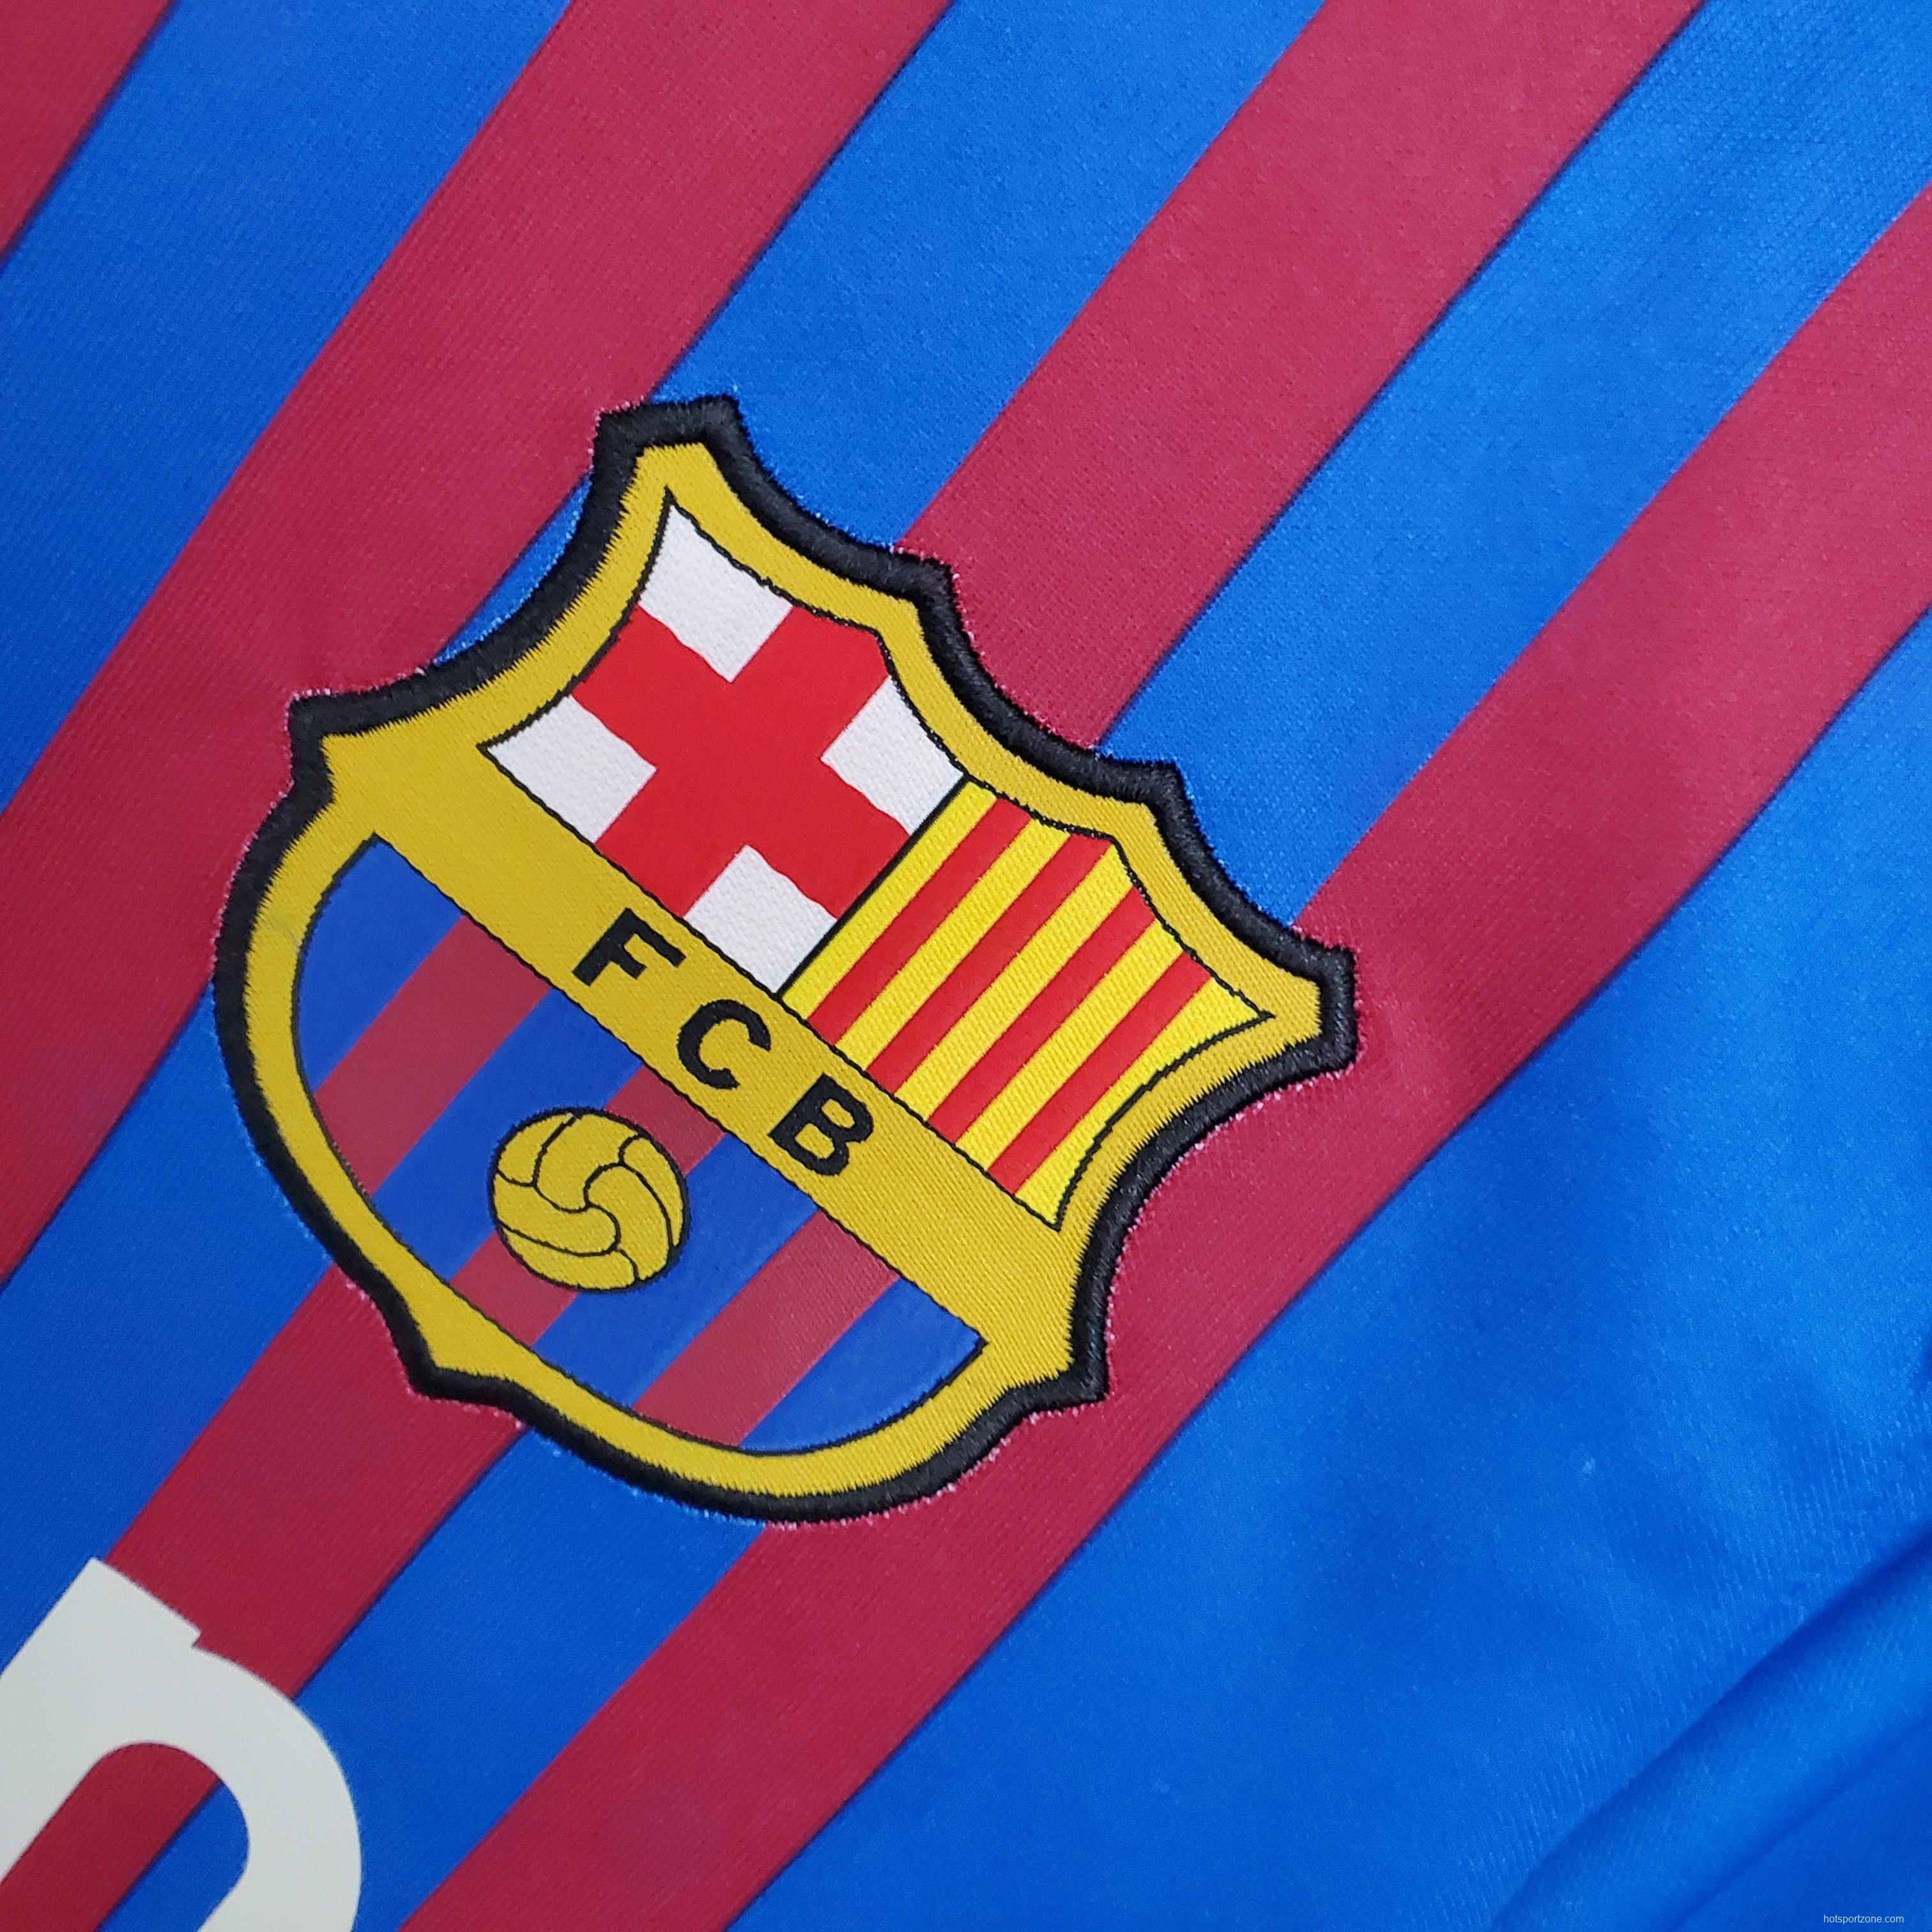 21/22 Long sleeve Barcelona home Soccer Jersey